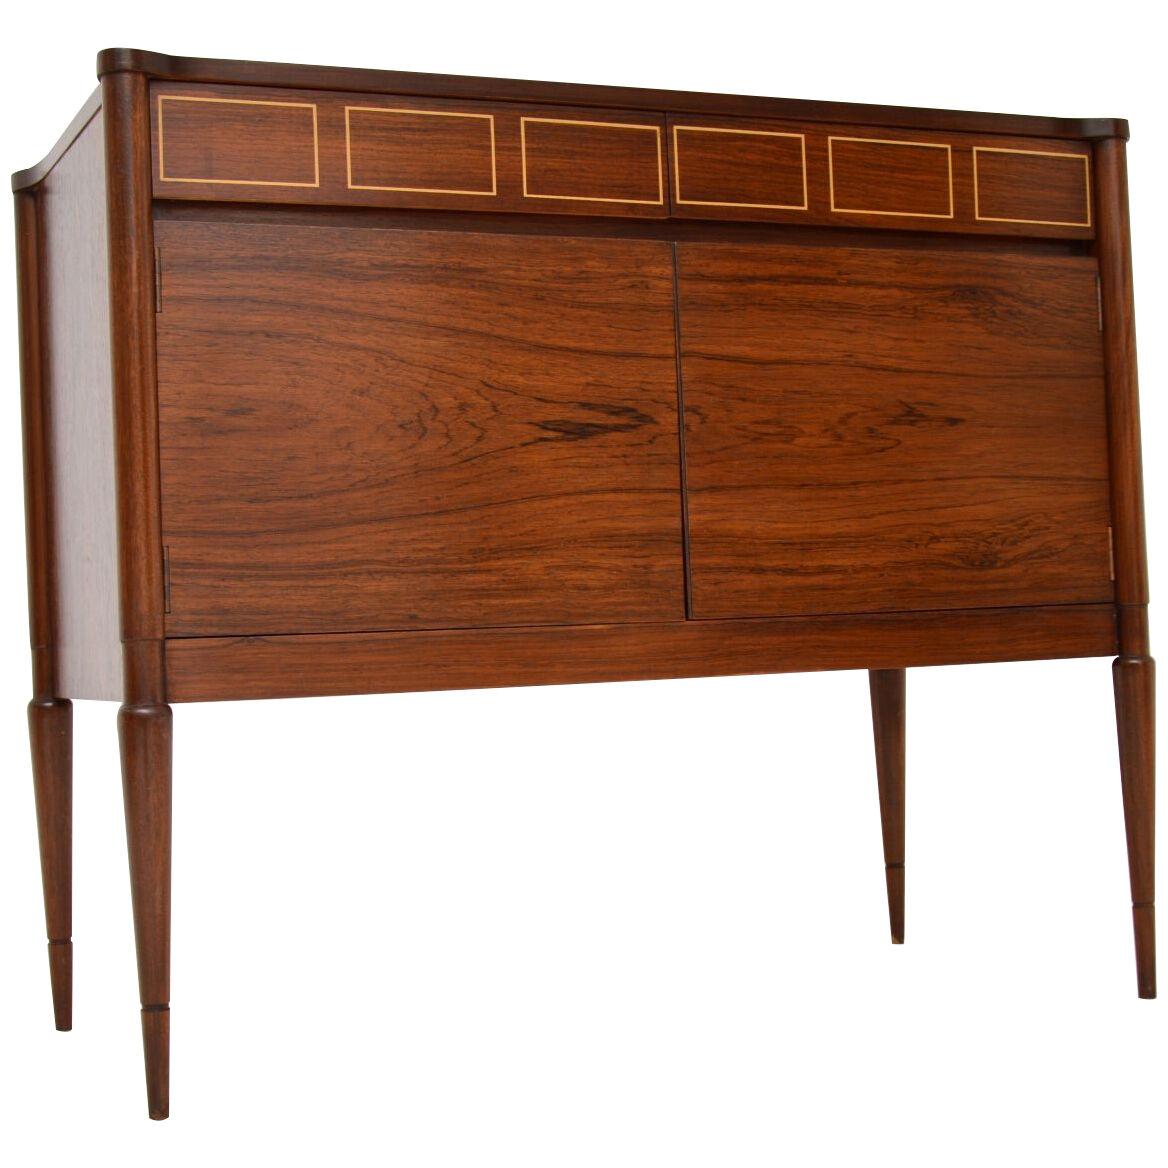 1960's Vintage Rosewood Sideboard / Cabinet